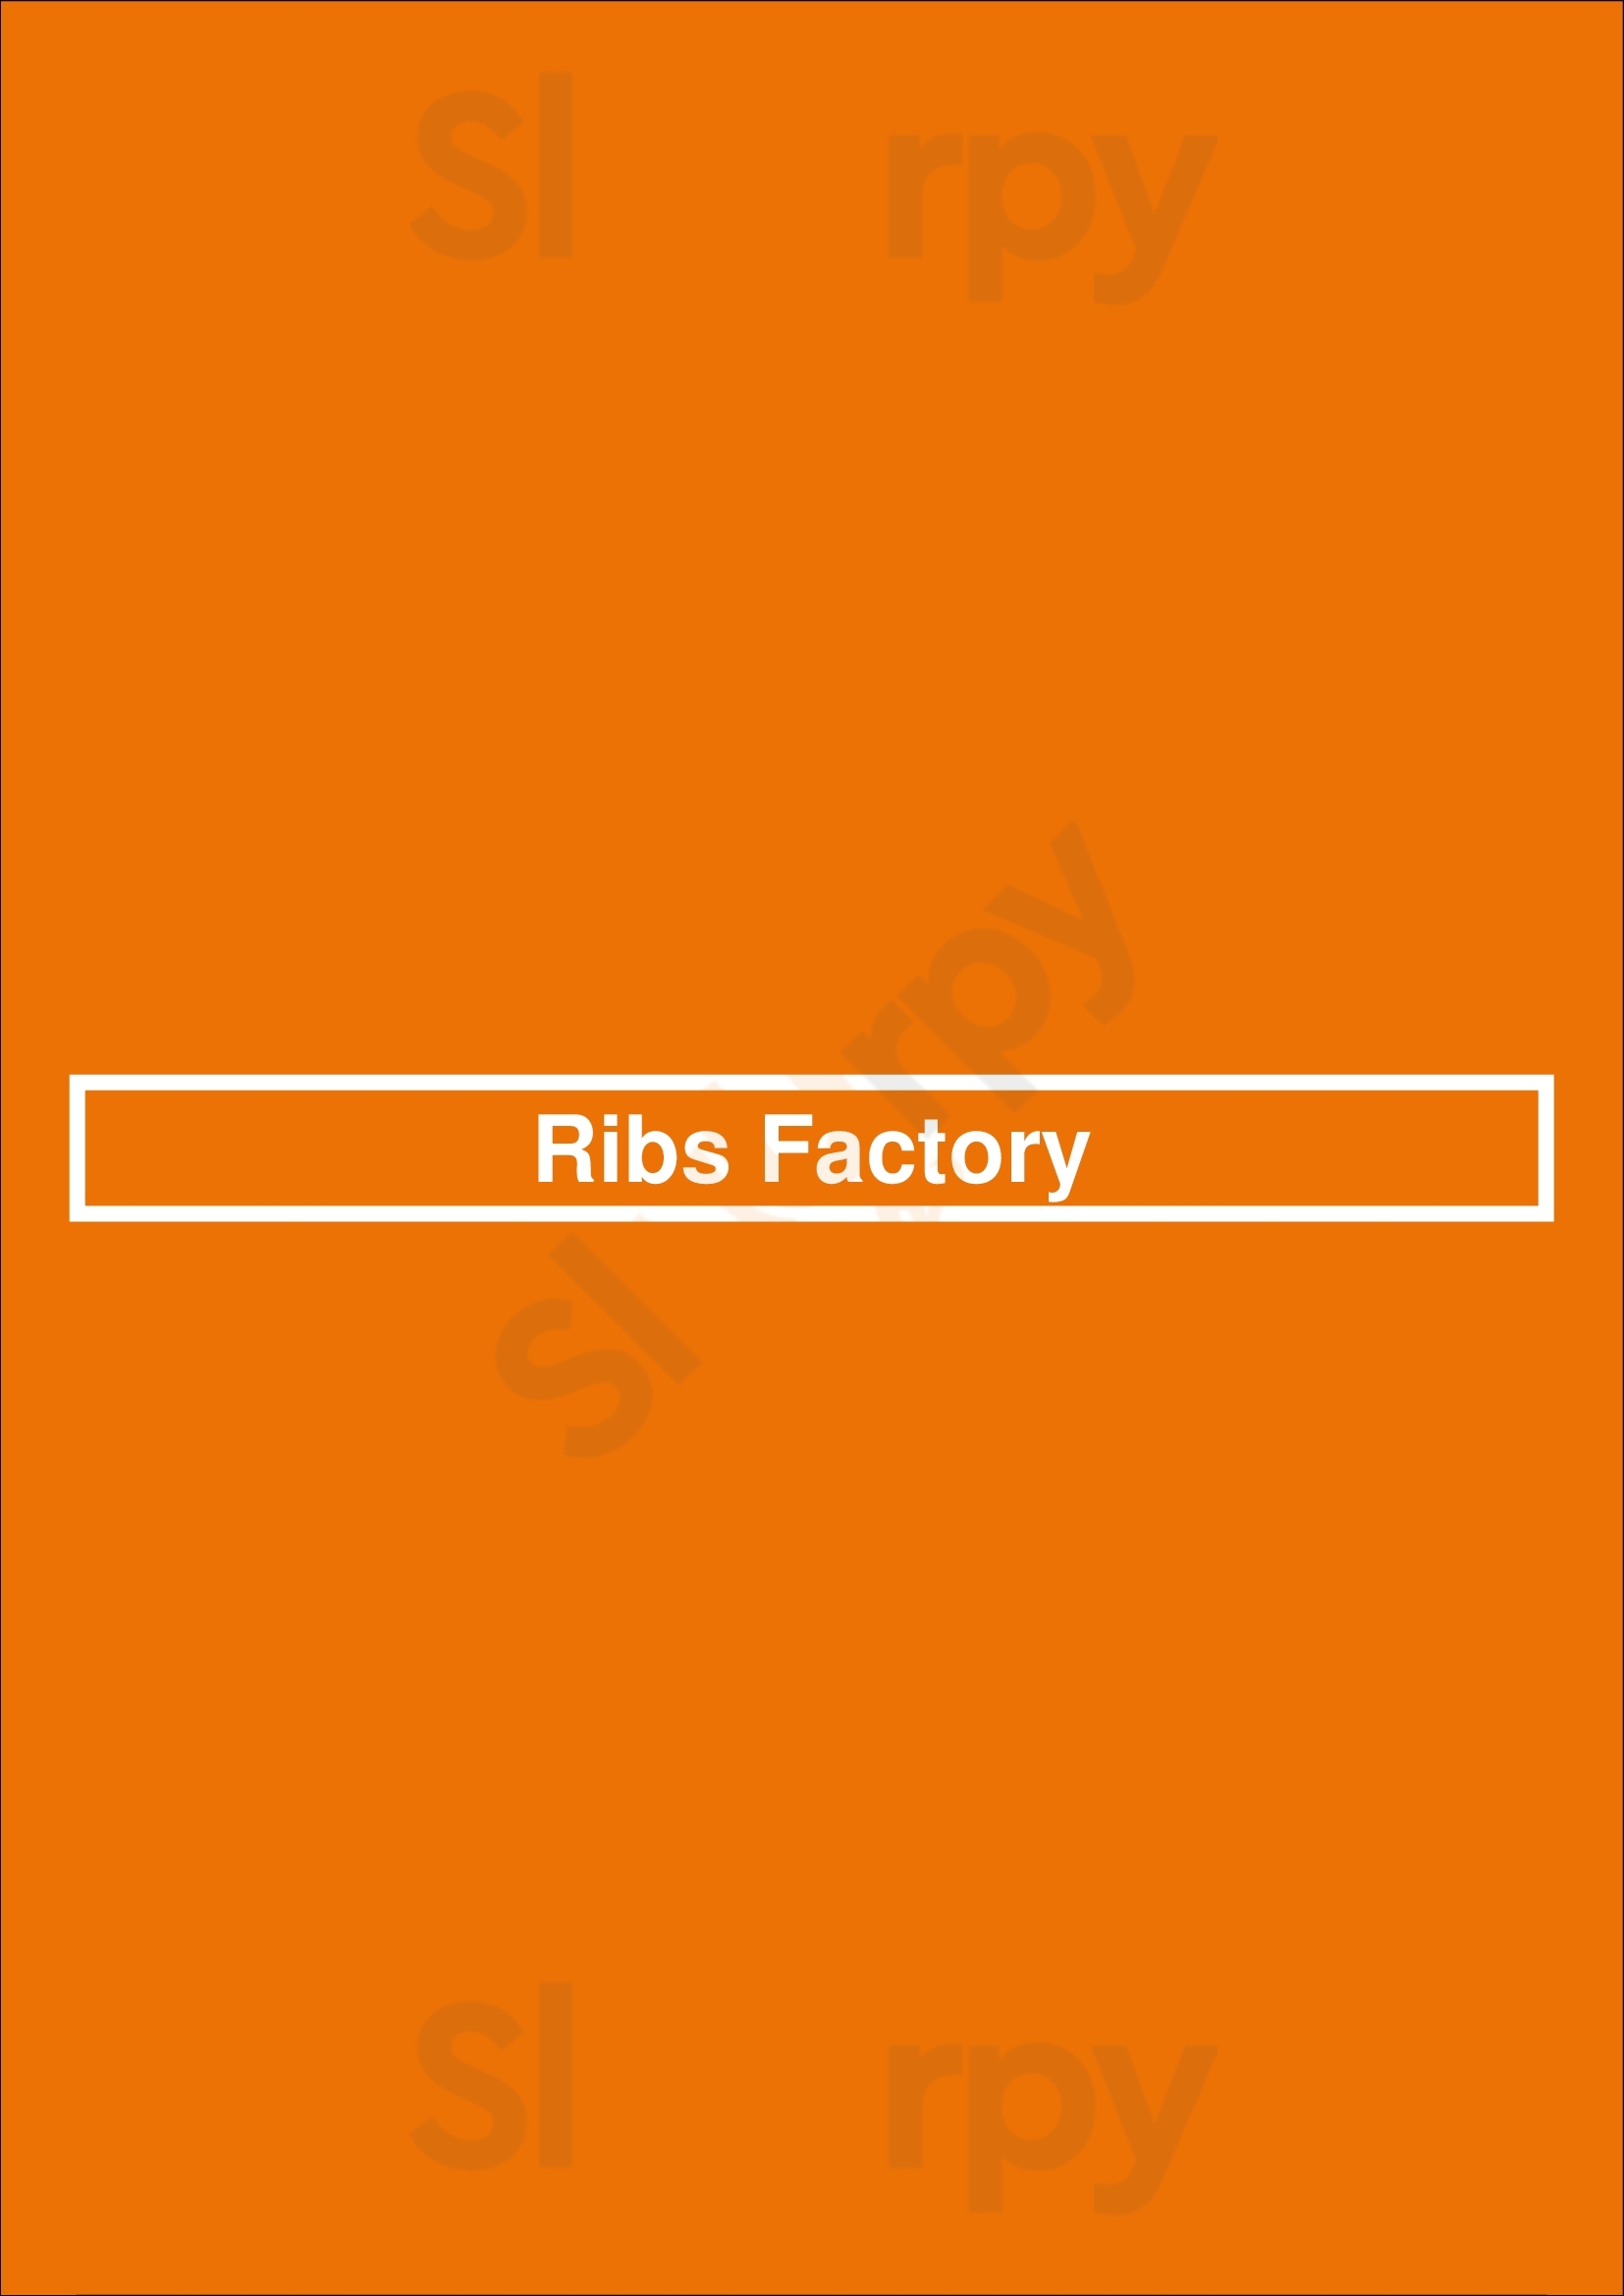 Ribs Factory Amersfoort Menu - 1